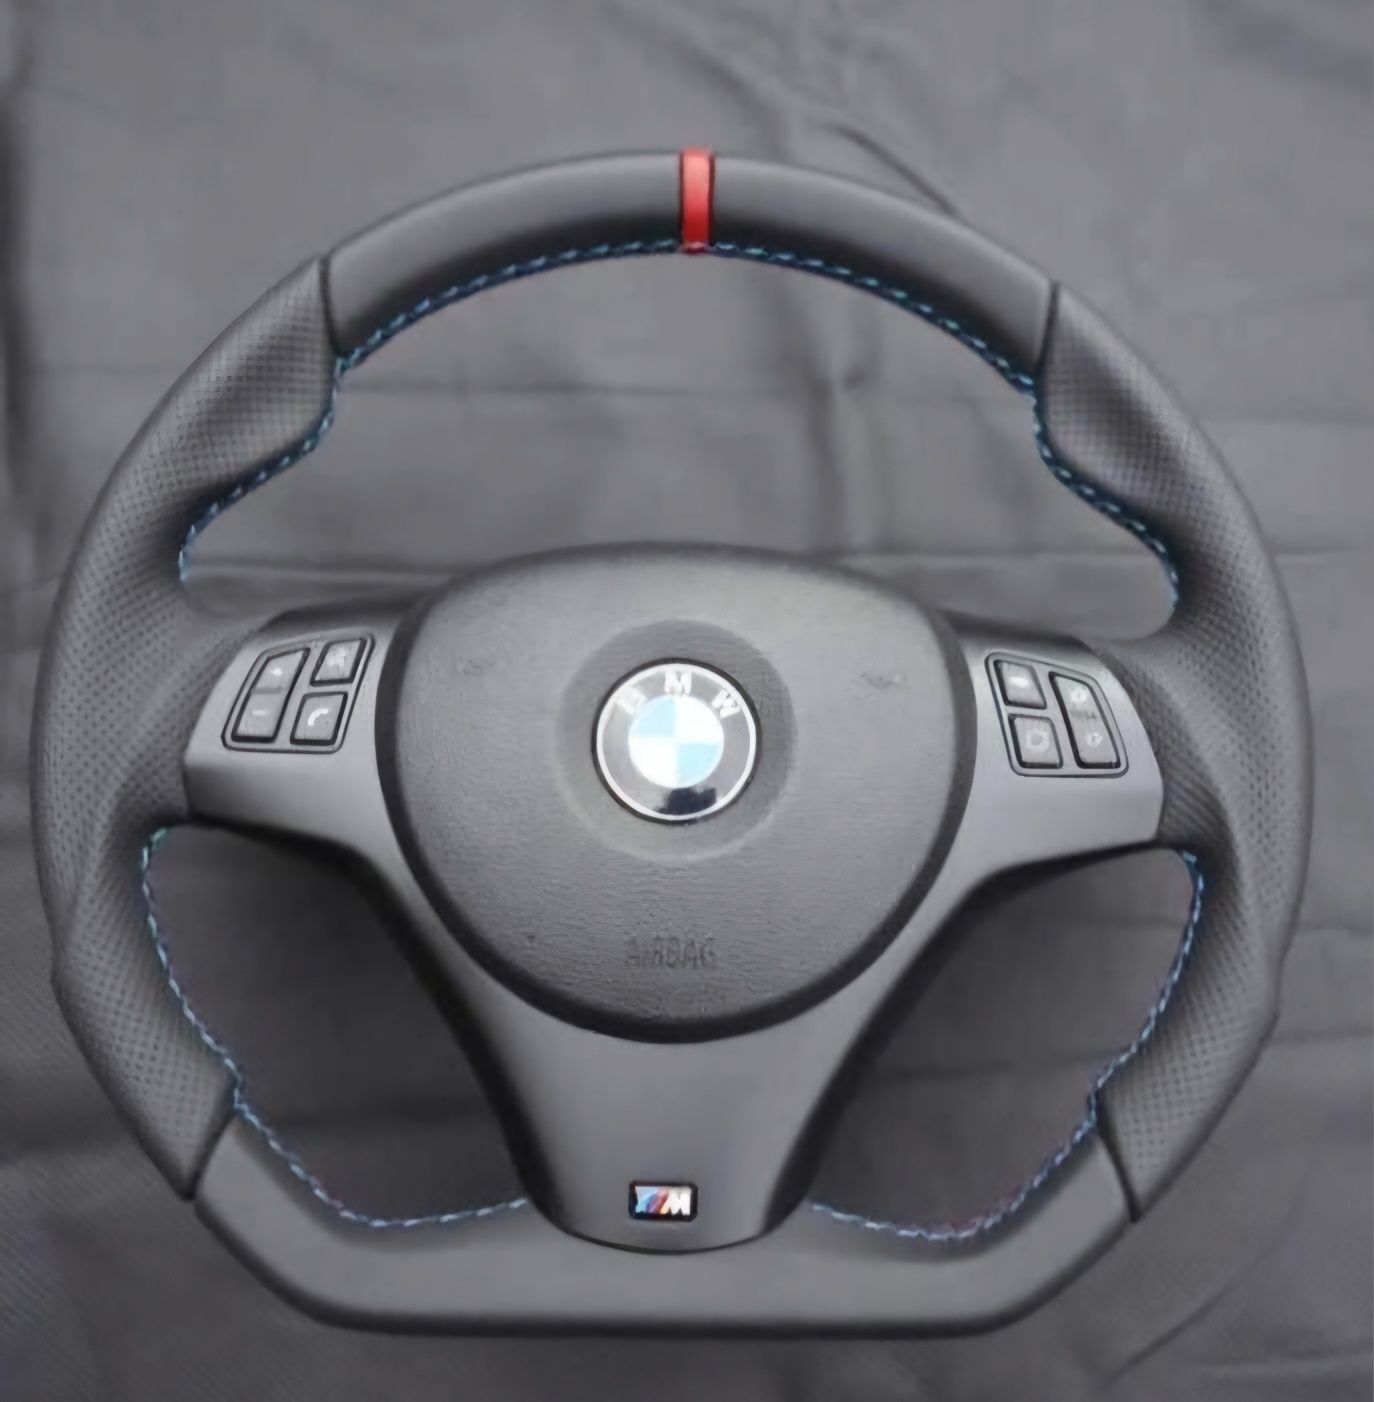 Volane ergonomice BMW, reducere pt Comenzi.